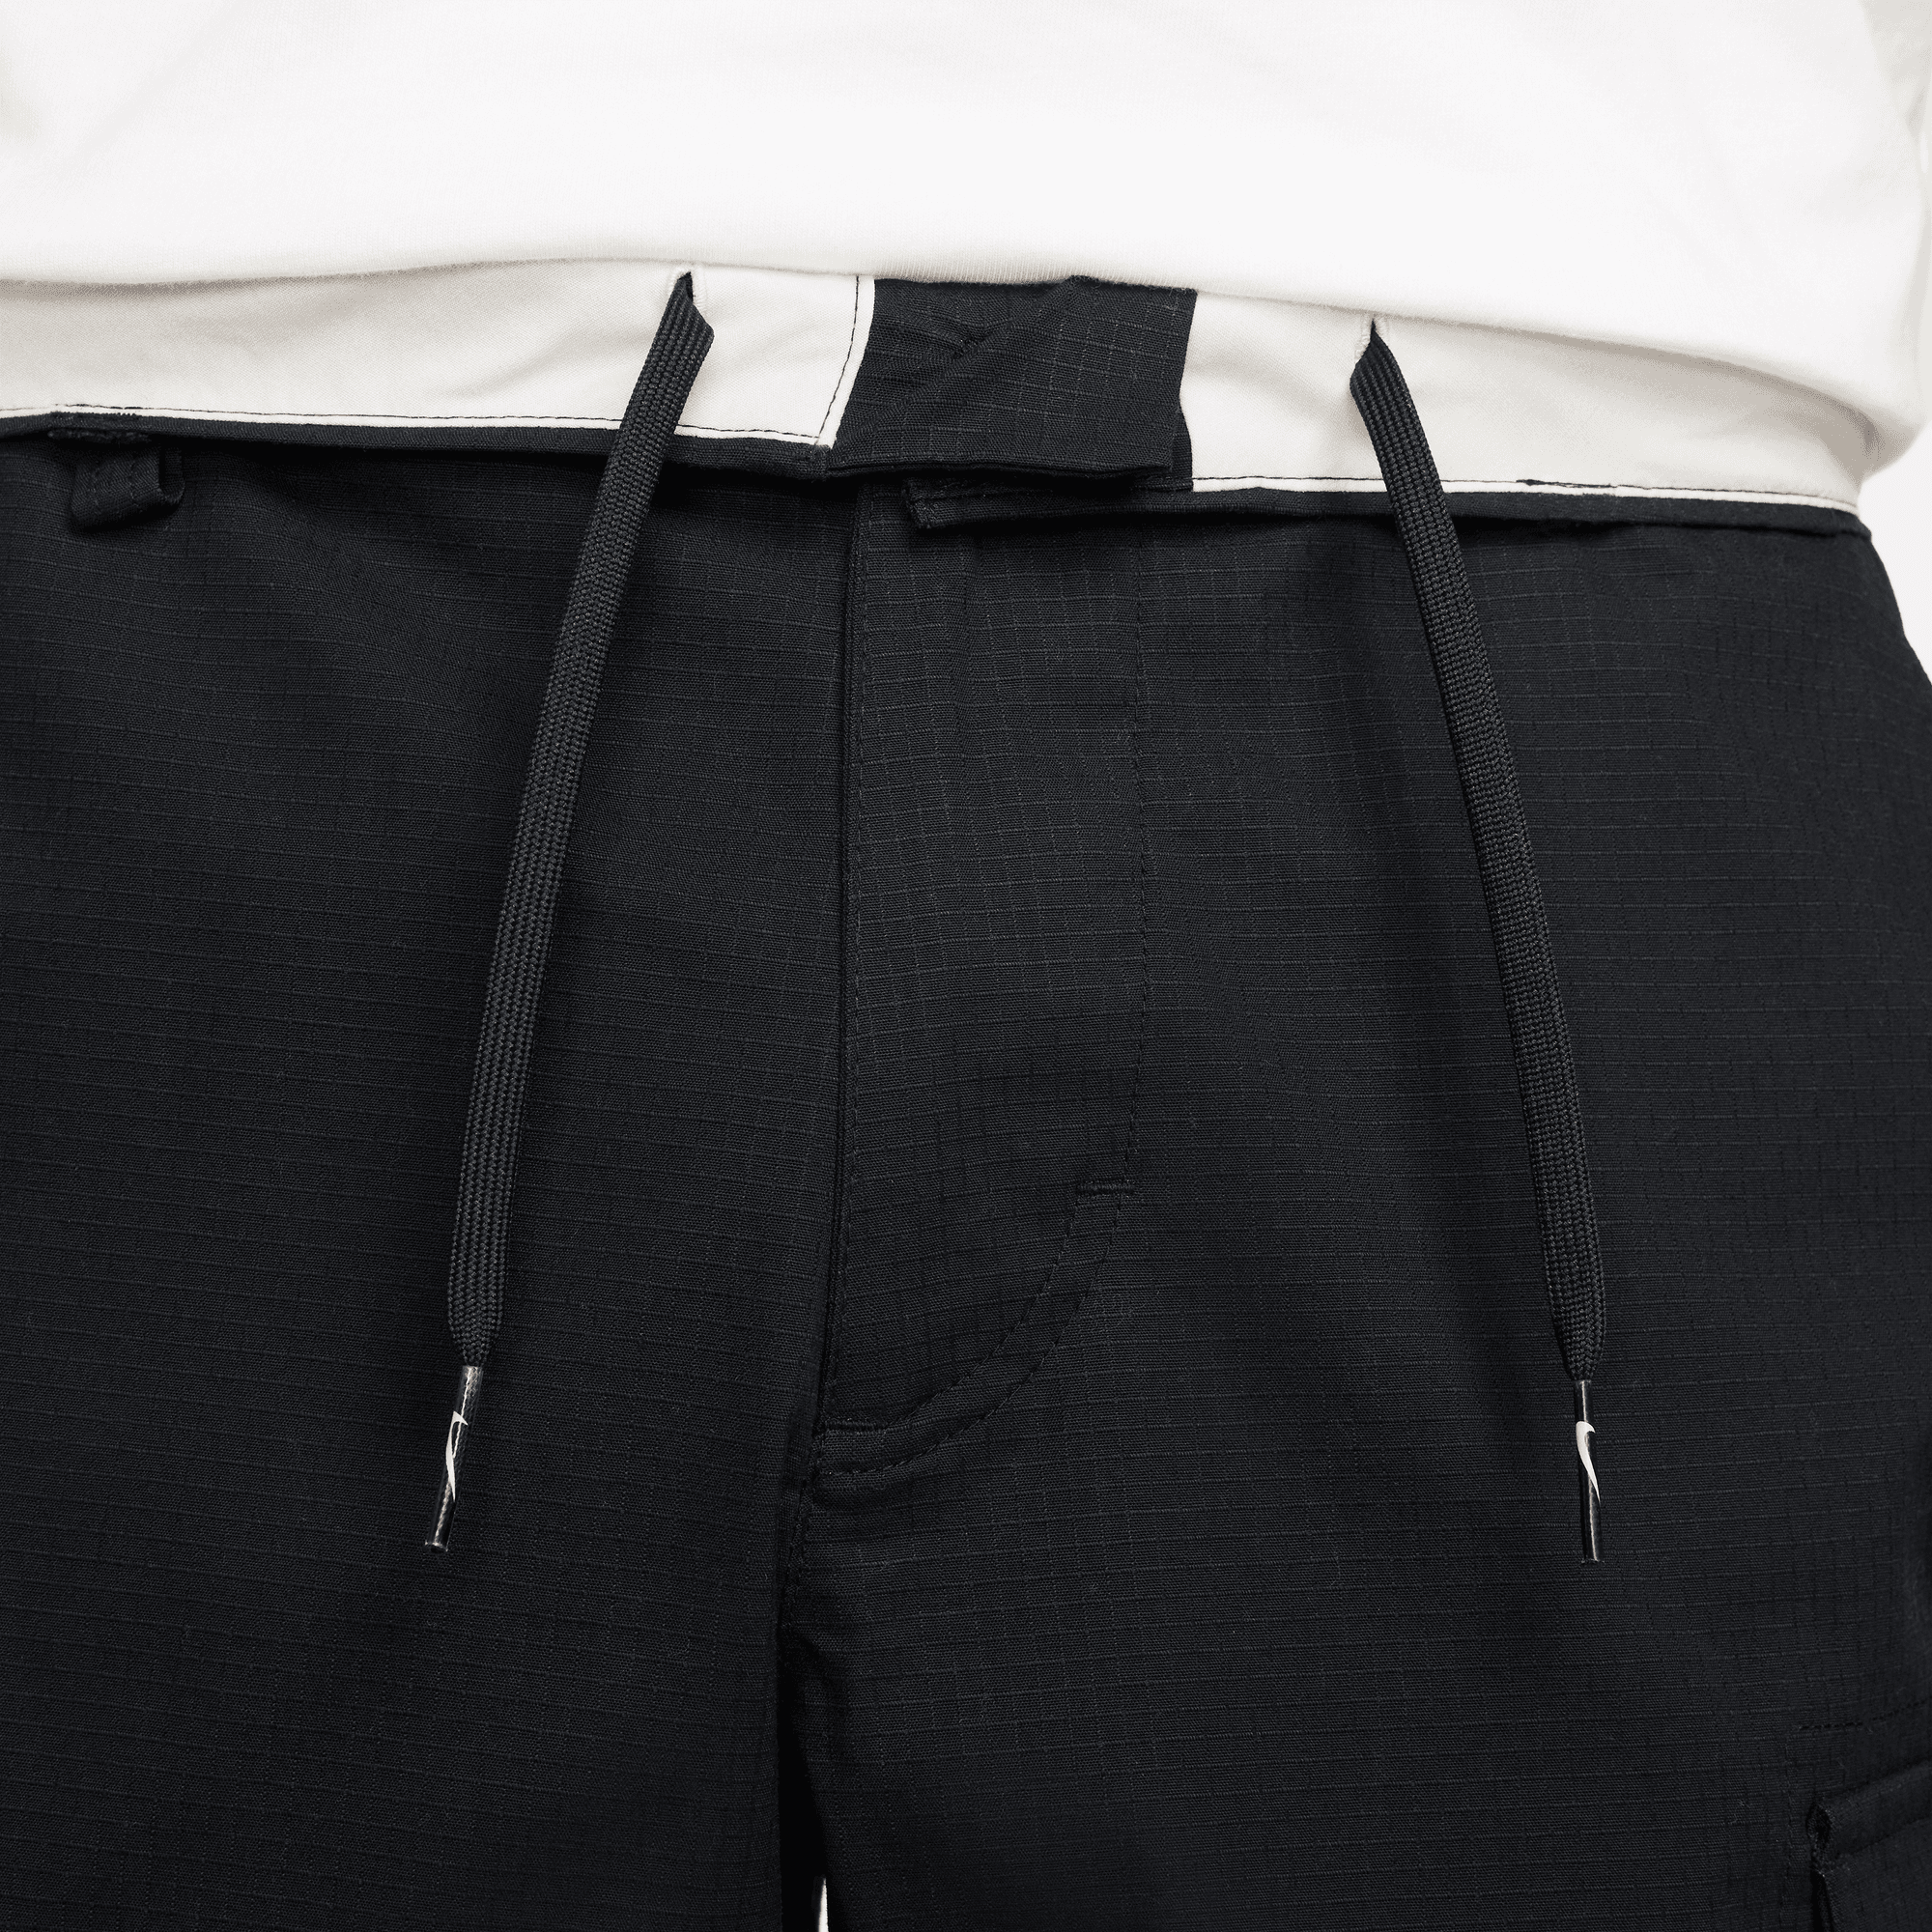 Black Kearny Nike SB Cargo Skate Pants Detail